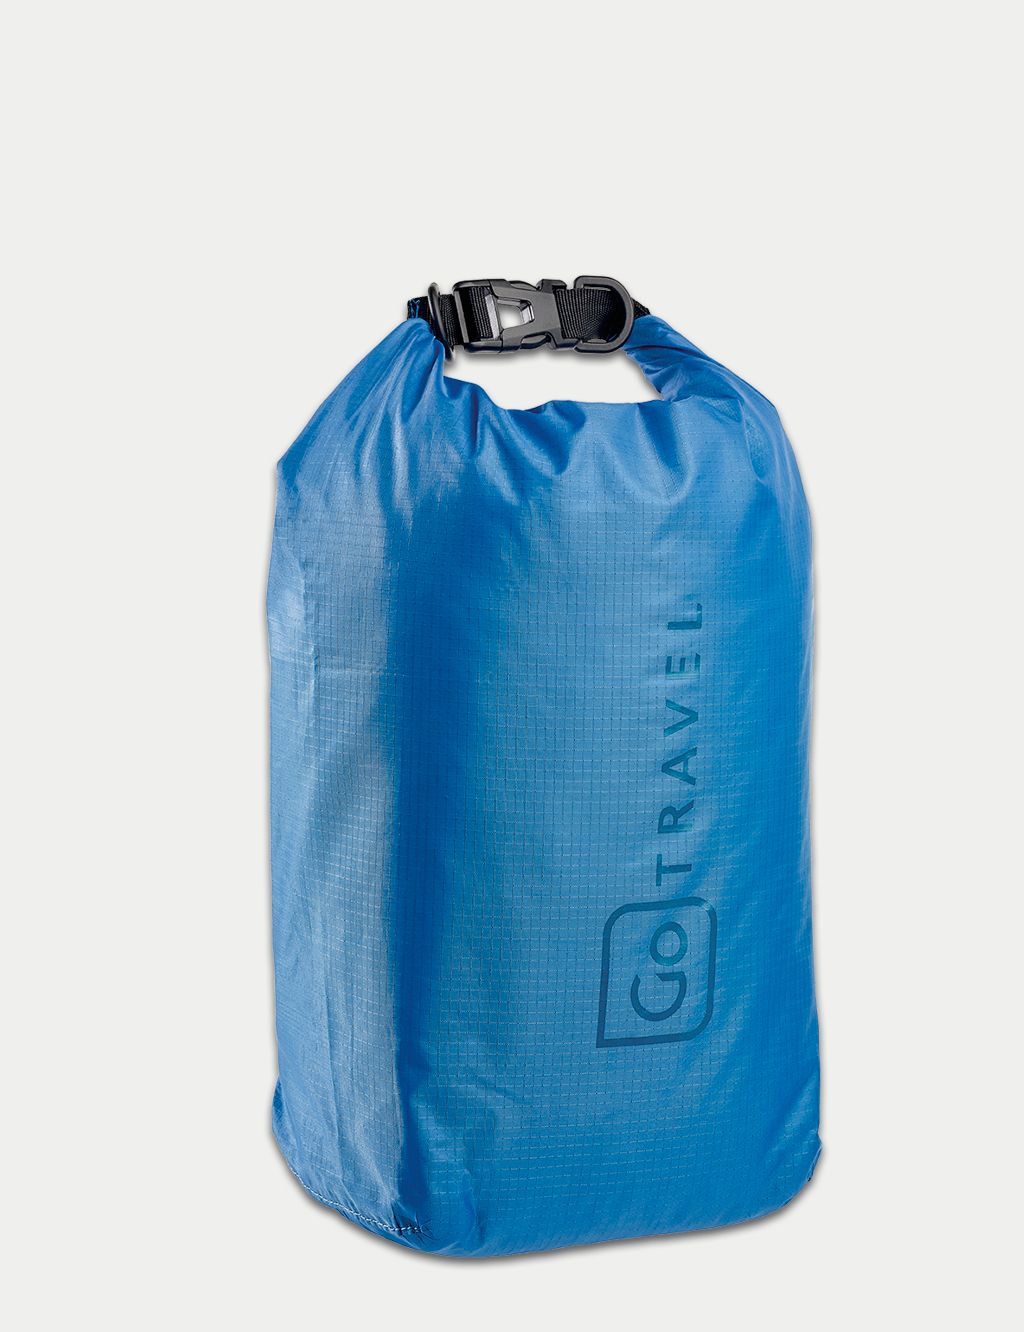 Wet or Dry Travel Bag